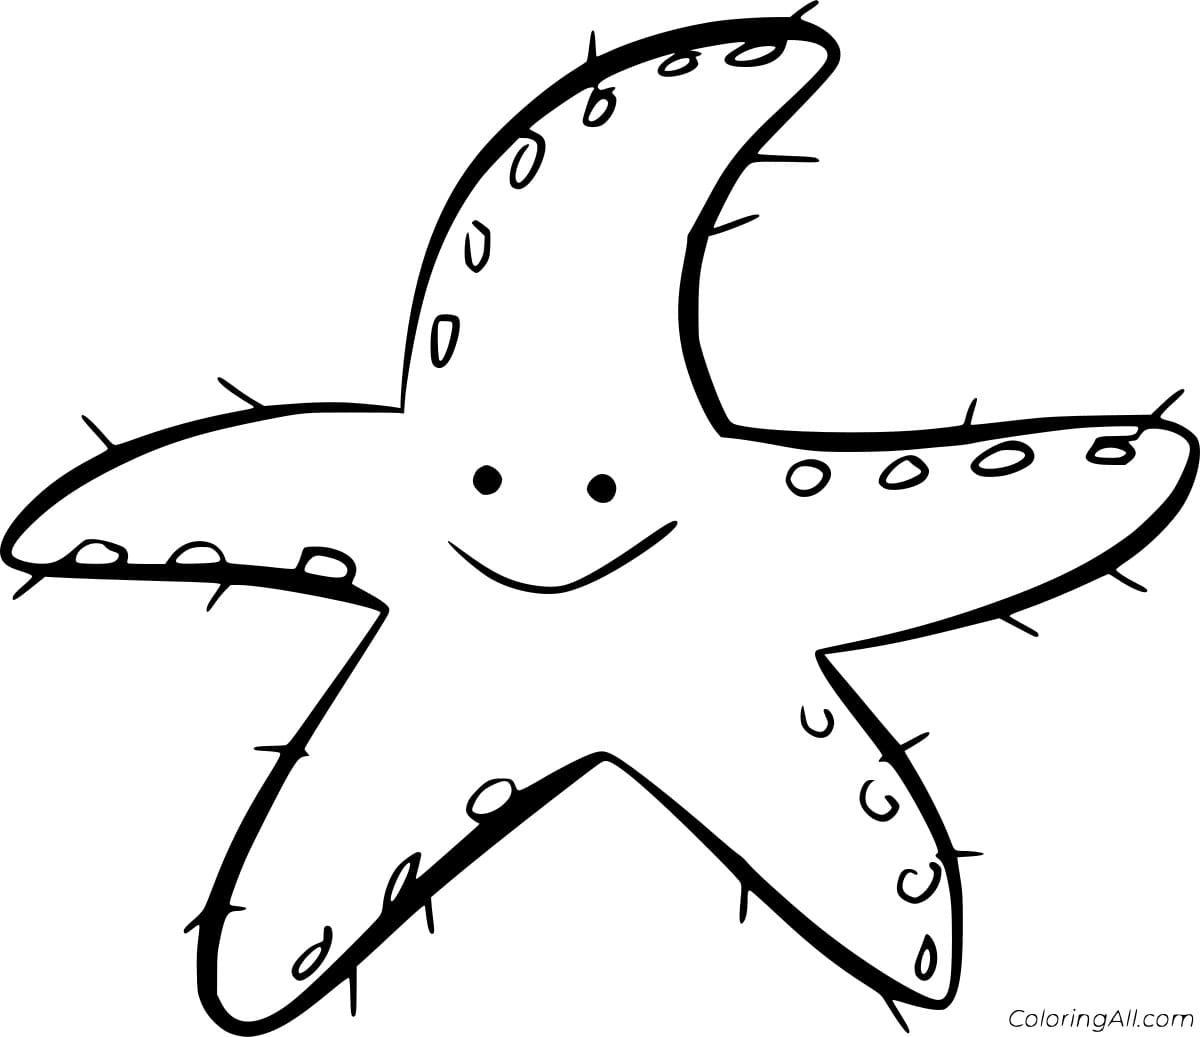 Cartoon Smiling Sea Star Image